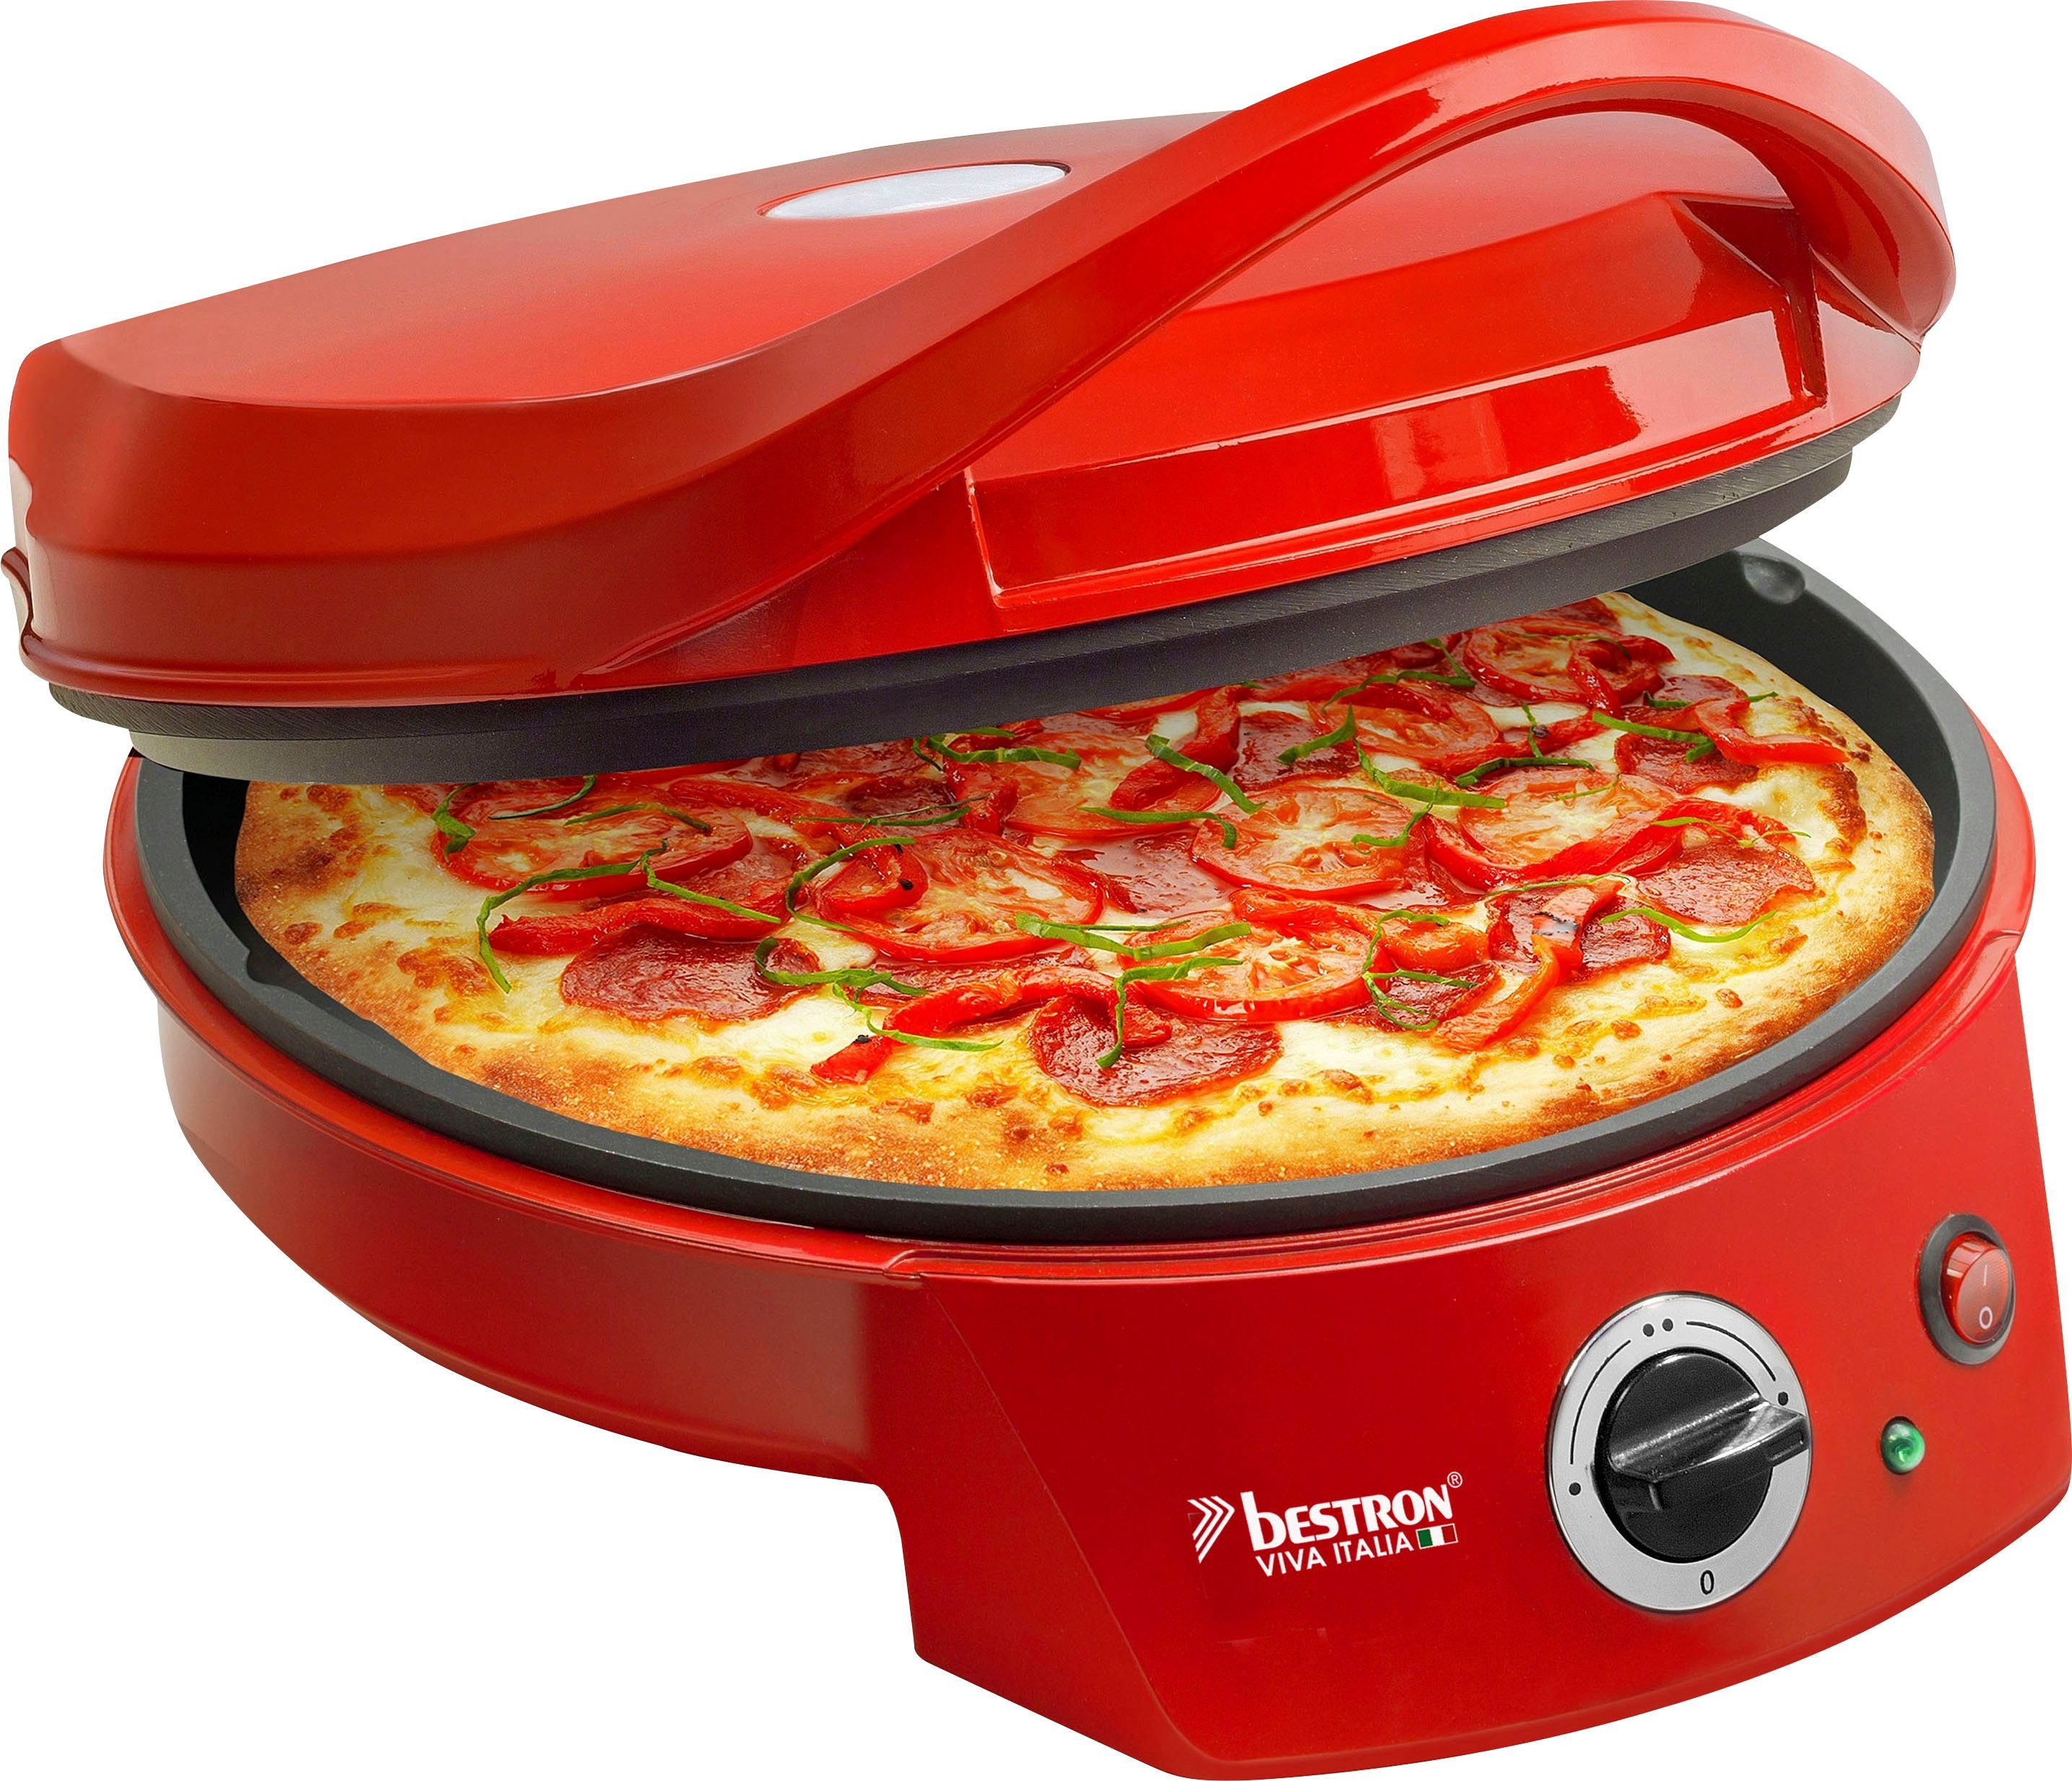 bestron Pizzaofen APZ400 Viva Italia, Ober-/Unterhitze, Bis max. 180°C, 1800 Watt, Rot